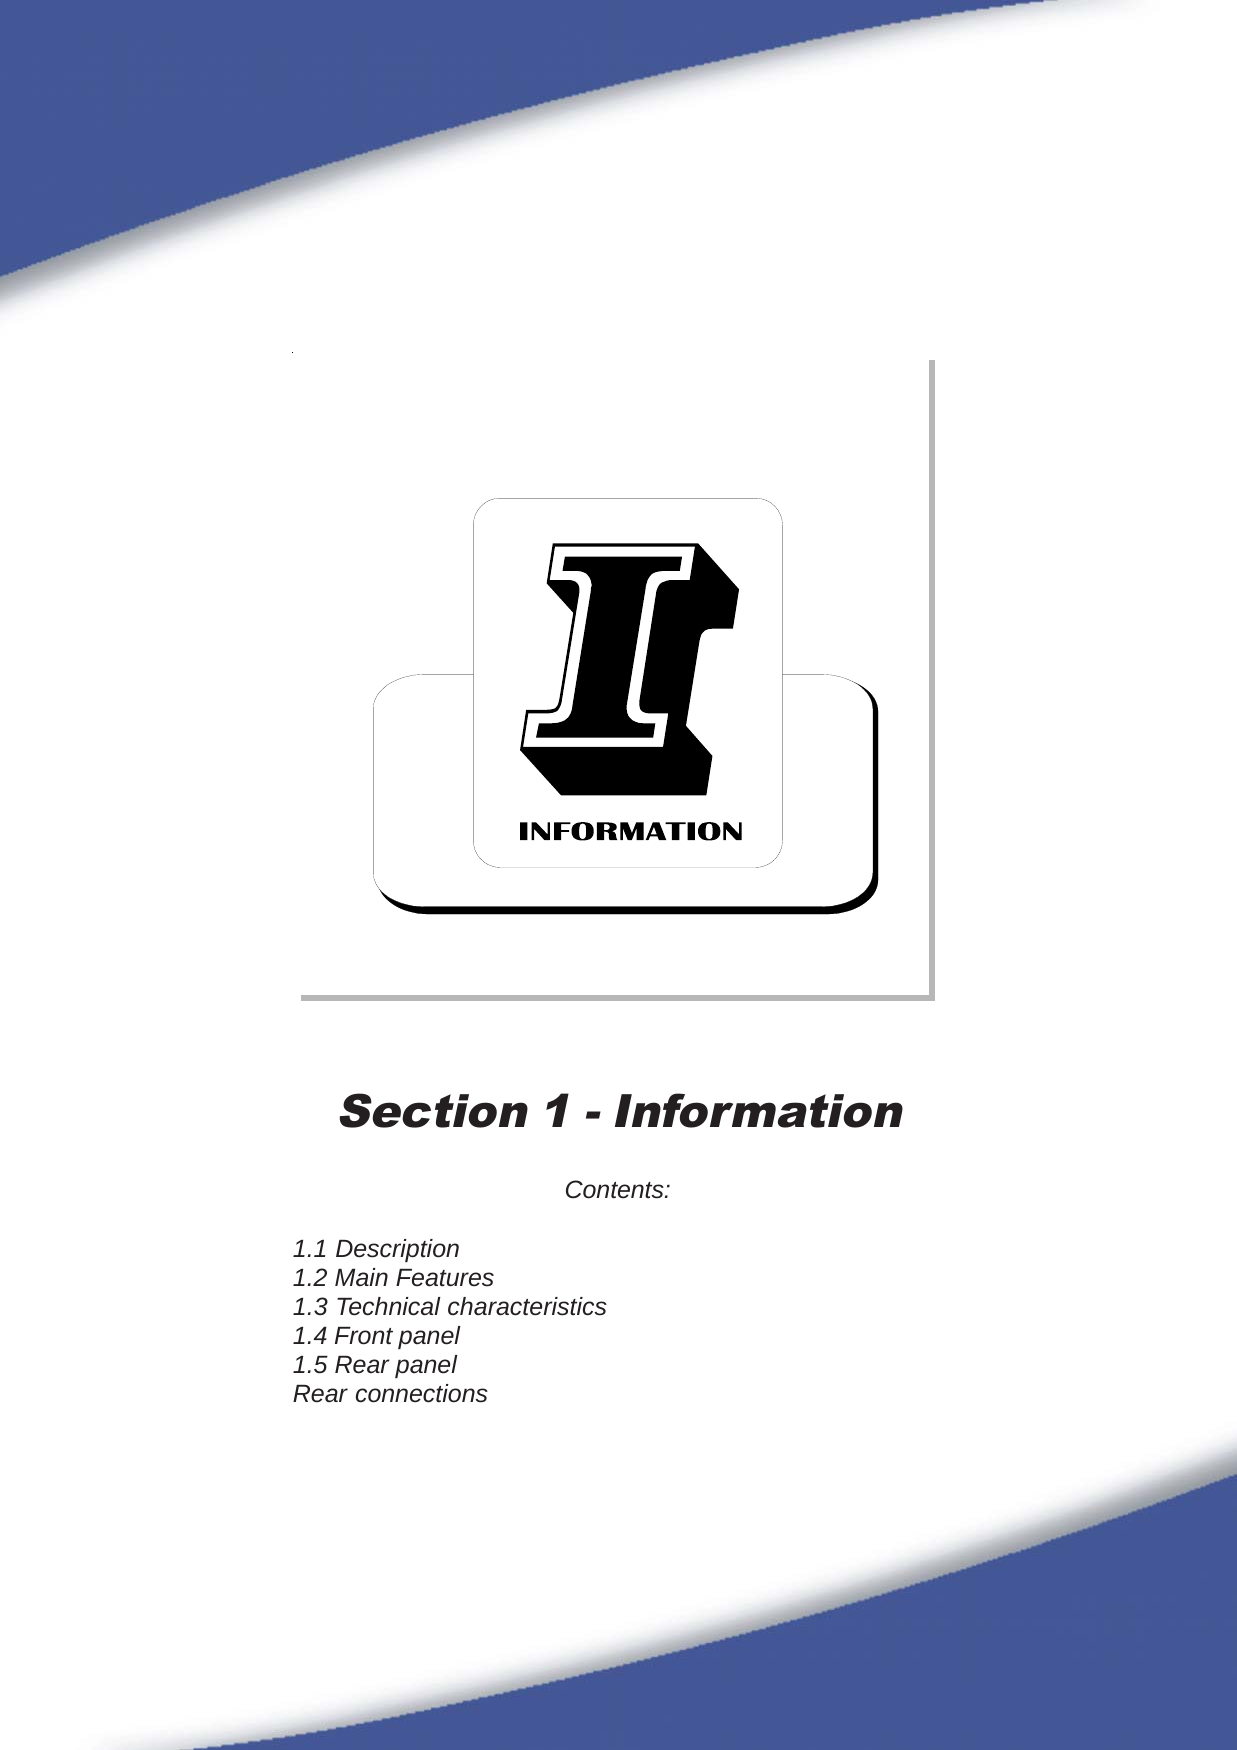 93Section 1 - InformationContents:1.1 Description1.2 Main Features1.3 Technical characteristics1.4 Front panel1.5 Rear panelRear connections